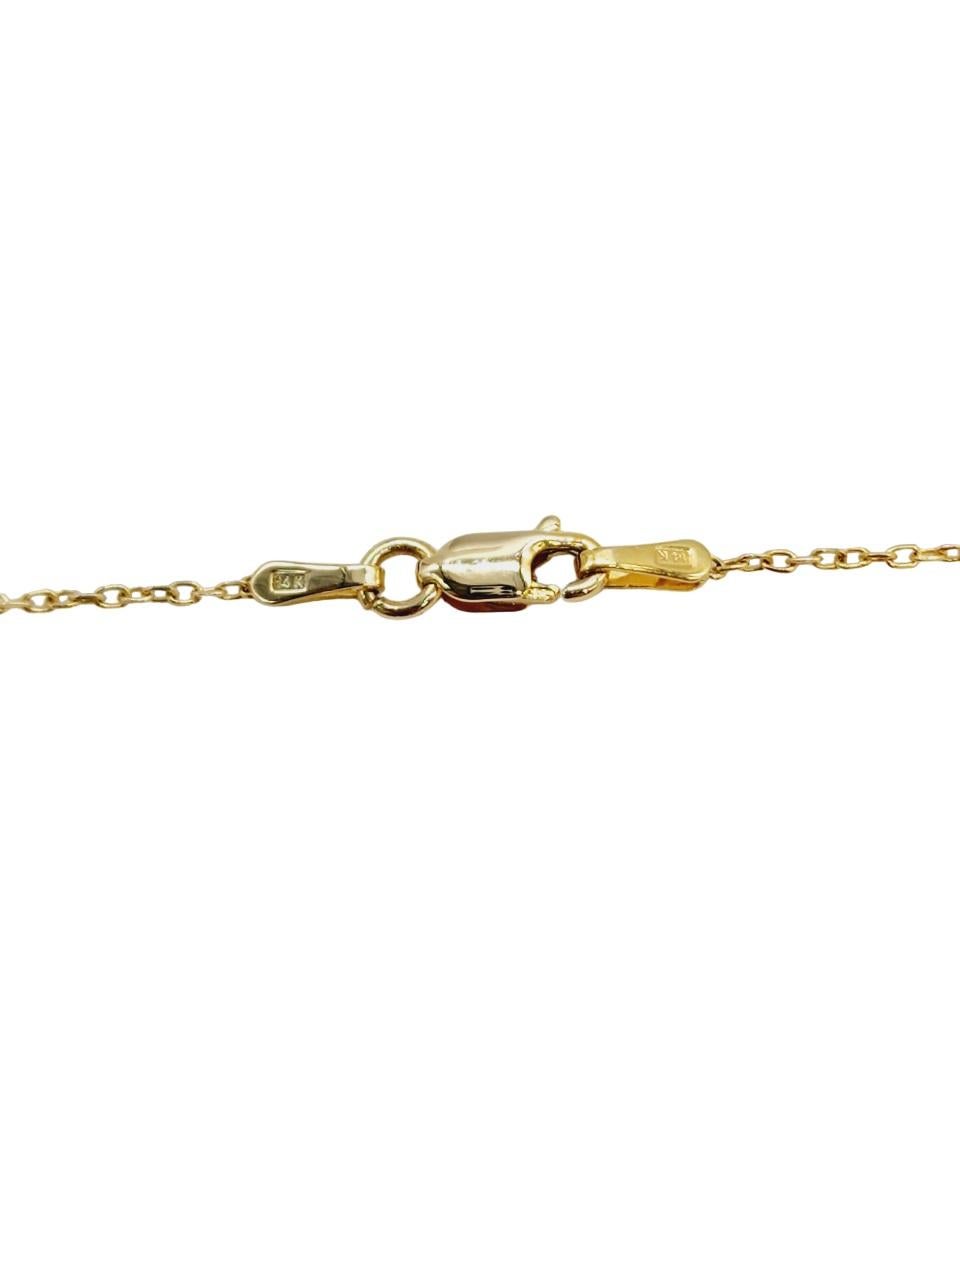 Round Cut 1.67 Carat Mini Diamond Necklace Chain 14 Karat Yellow Gold 23'' For Sale